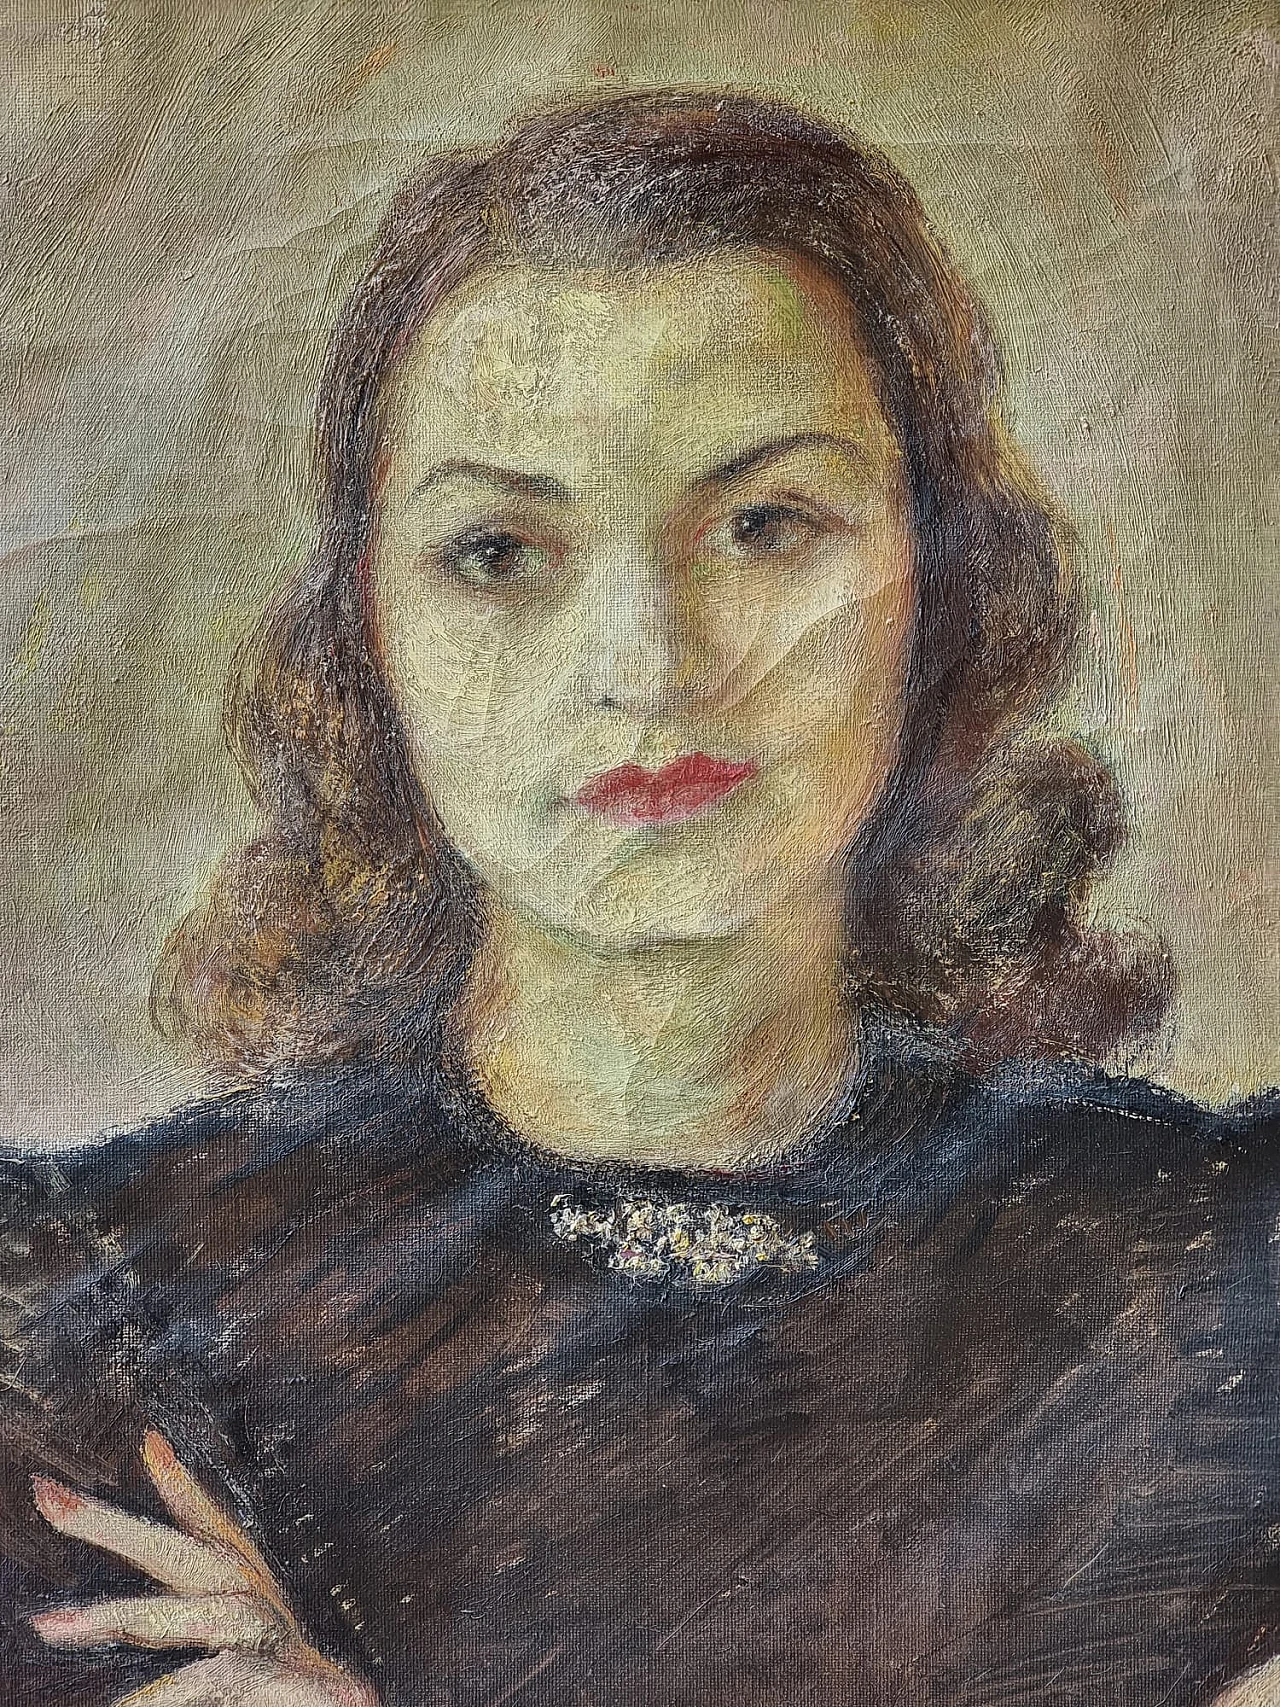 Andrea Scaramucci, female portrait, oil painting on canvas, 1940 3